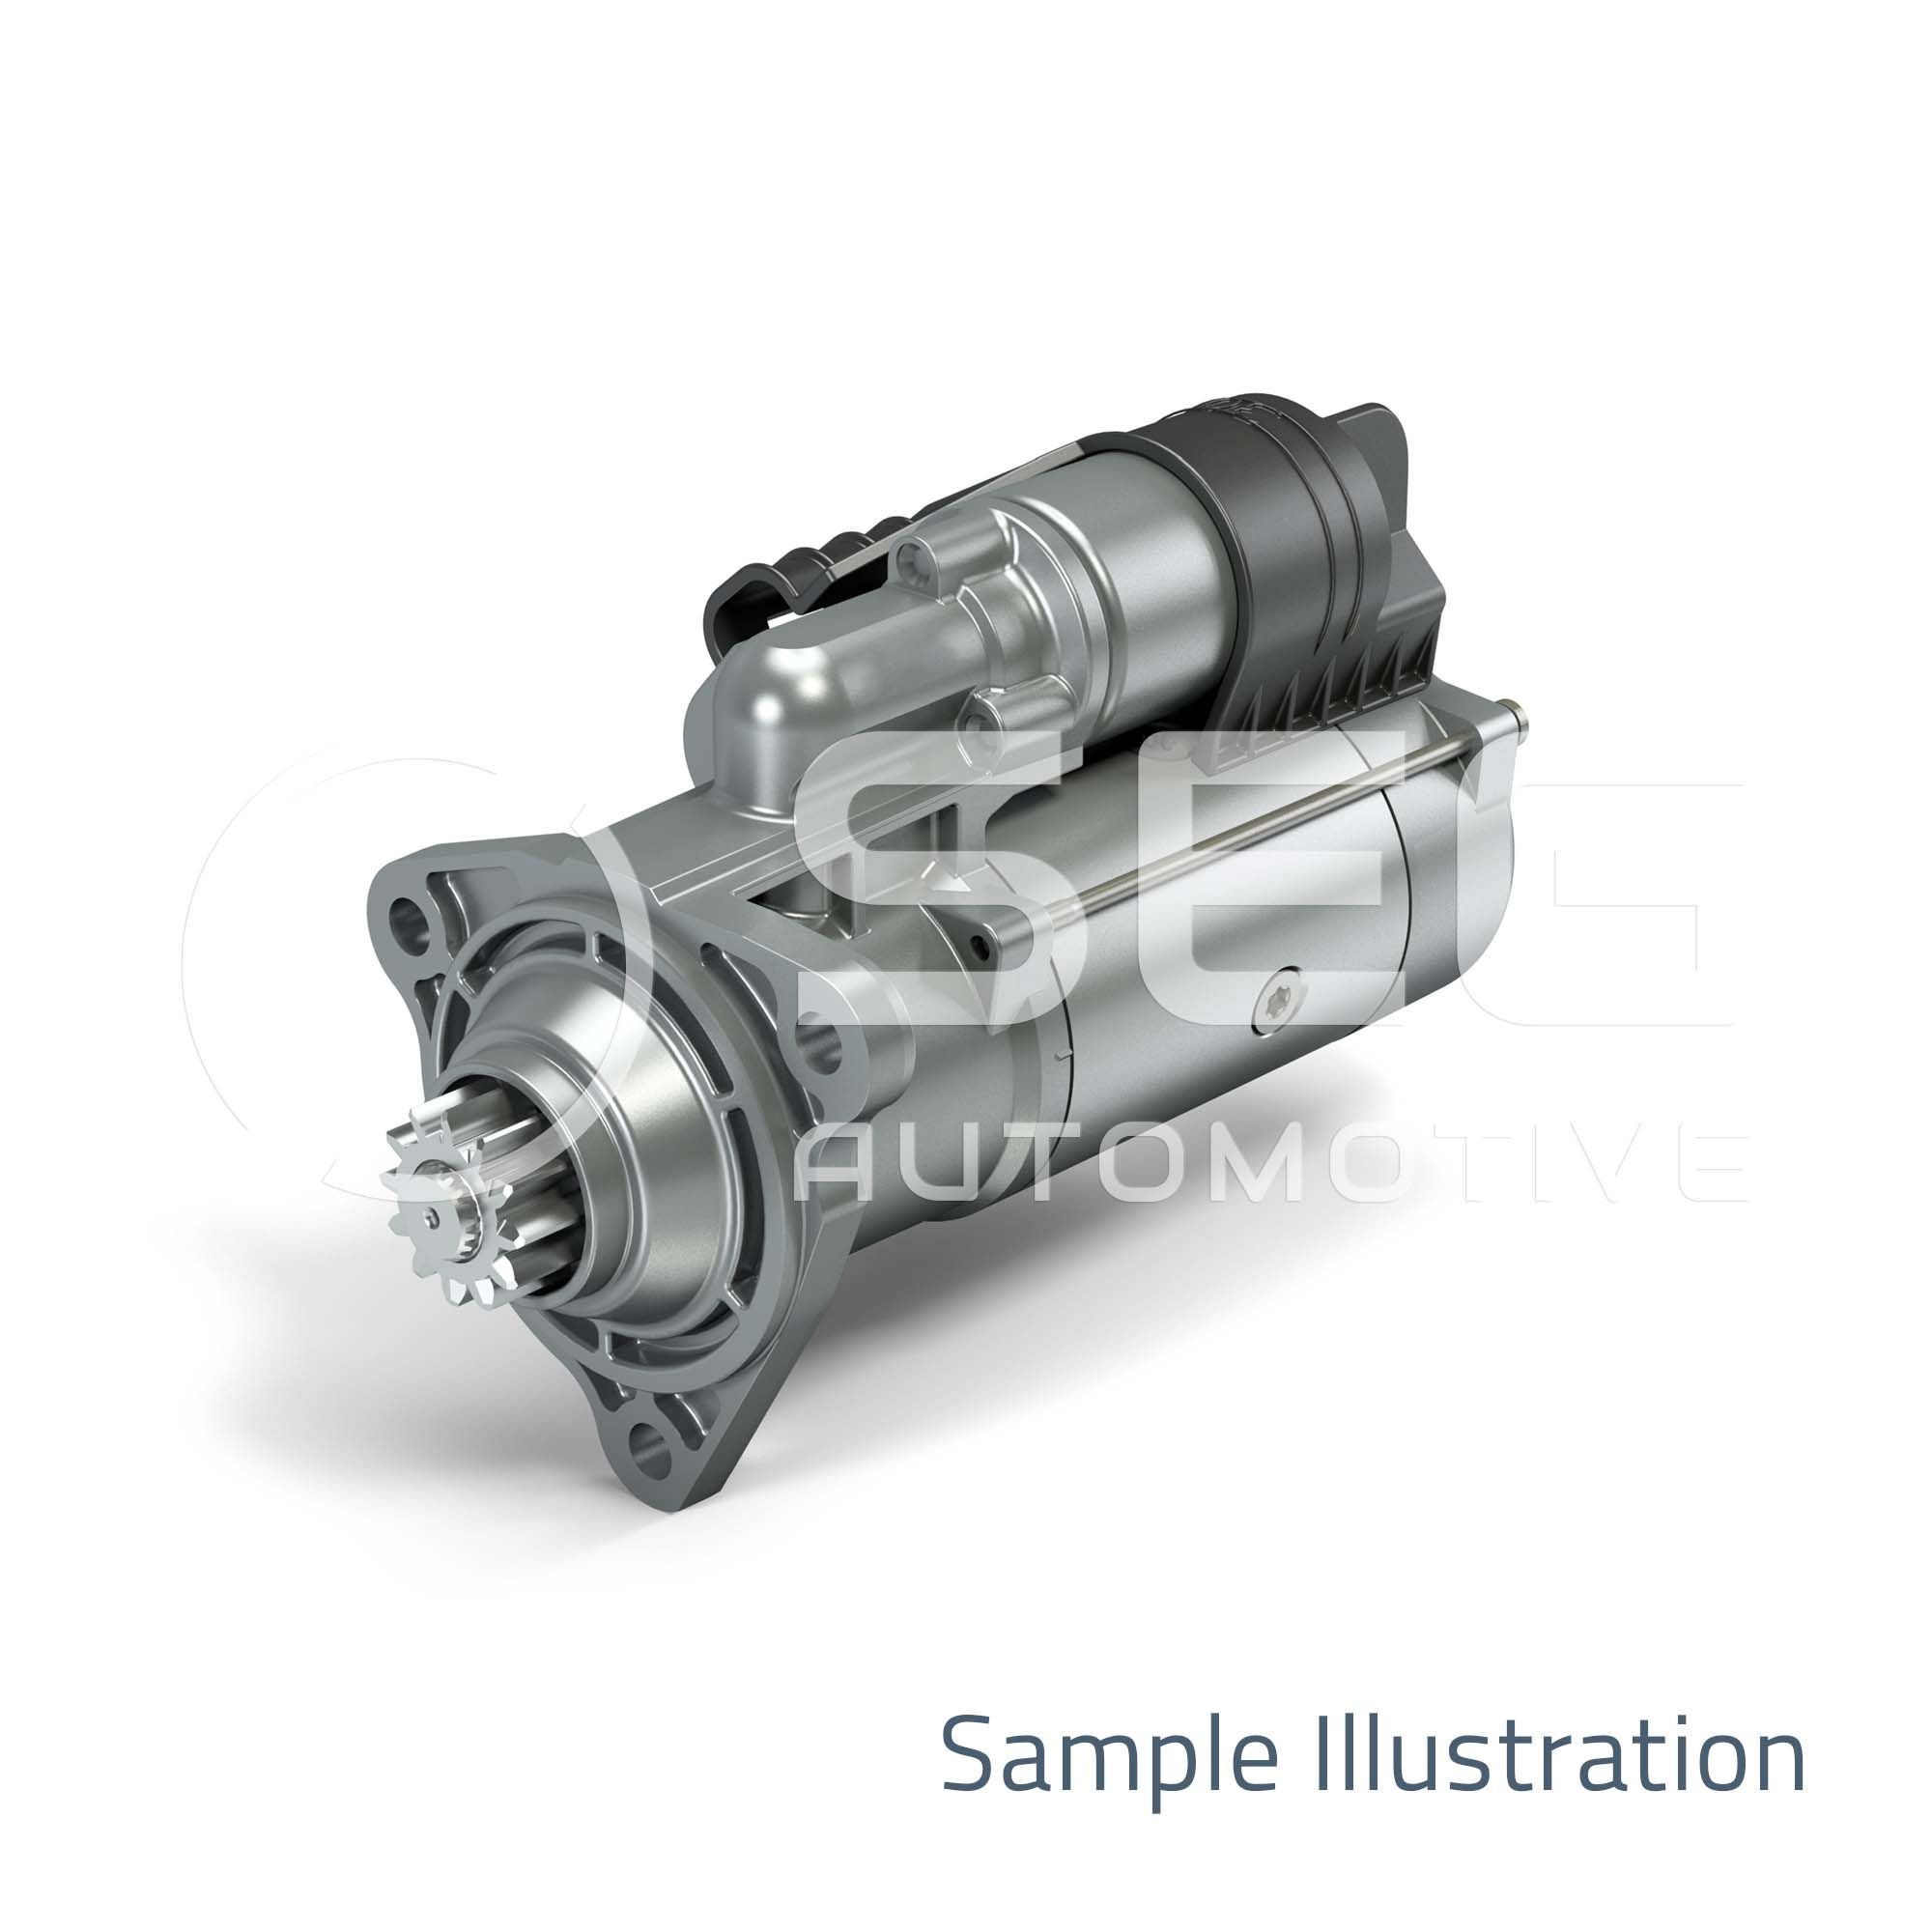 SEG Automotive 0001251006 Starter motor 2852405